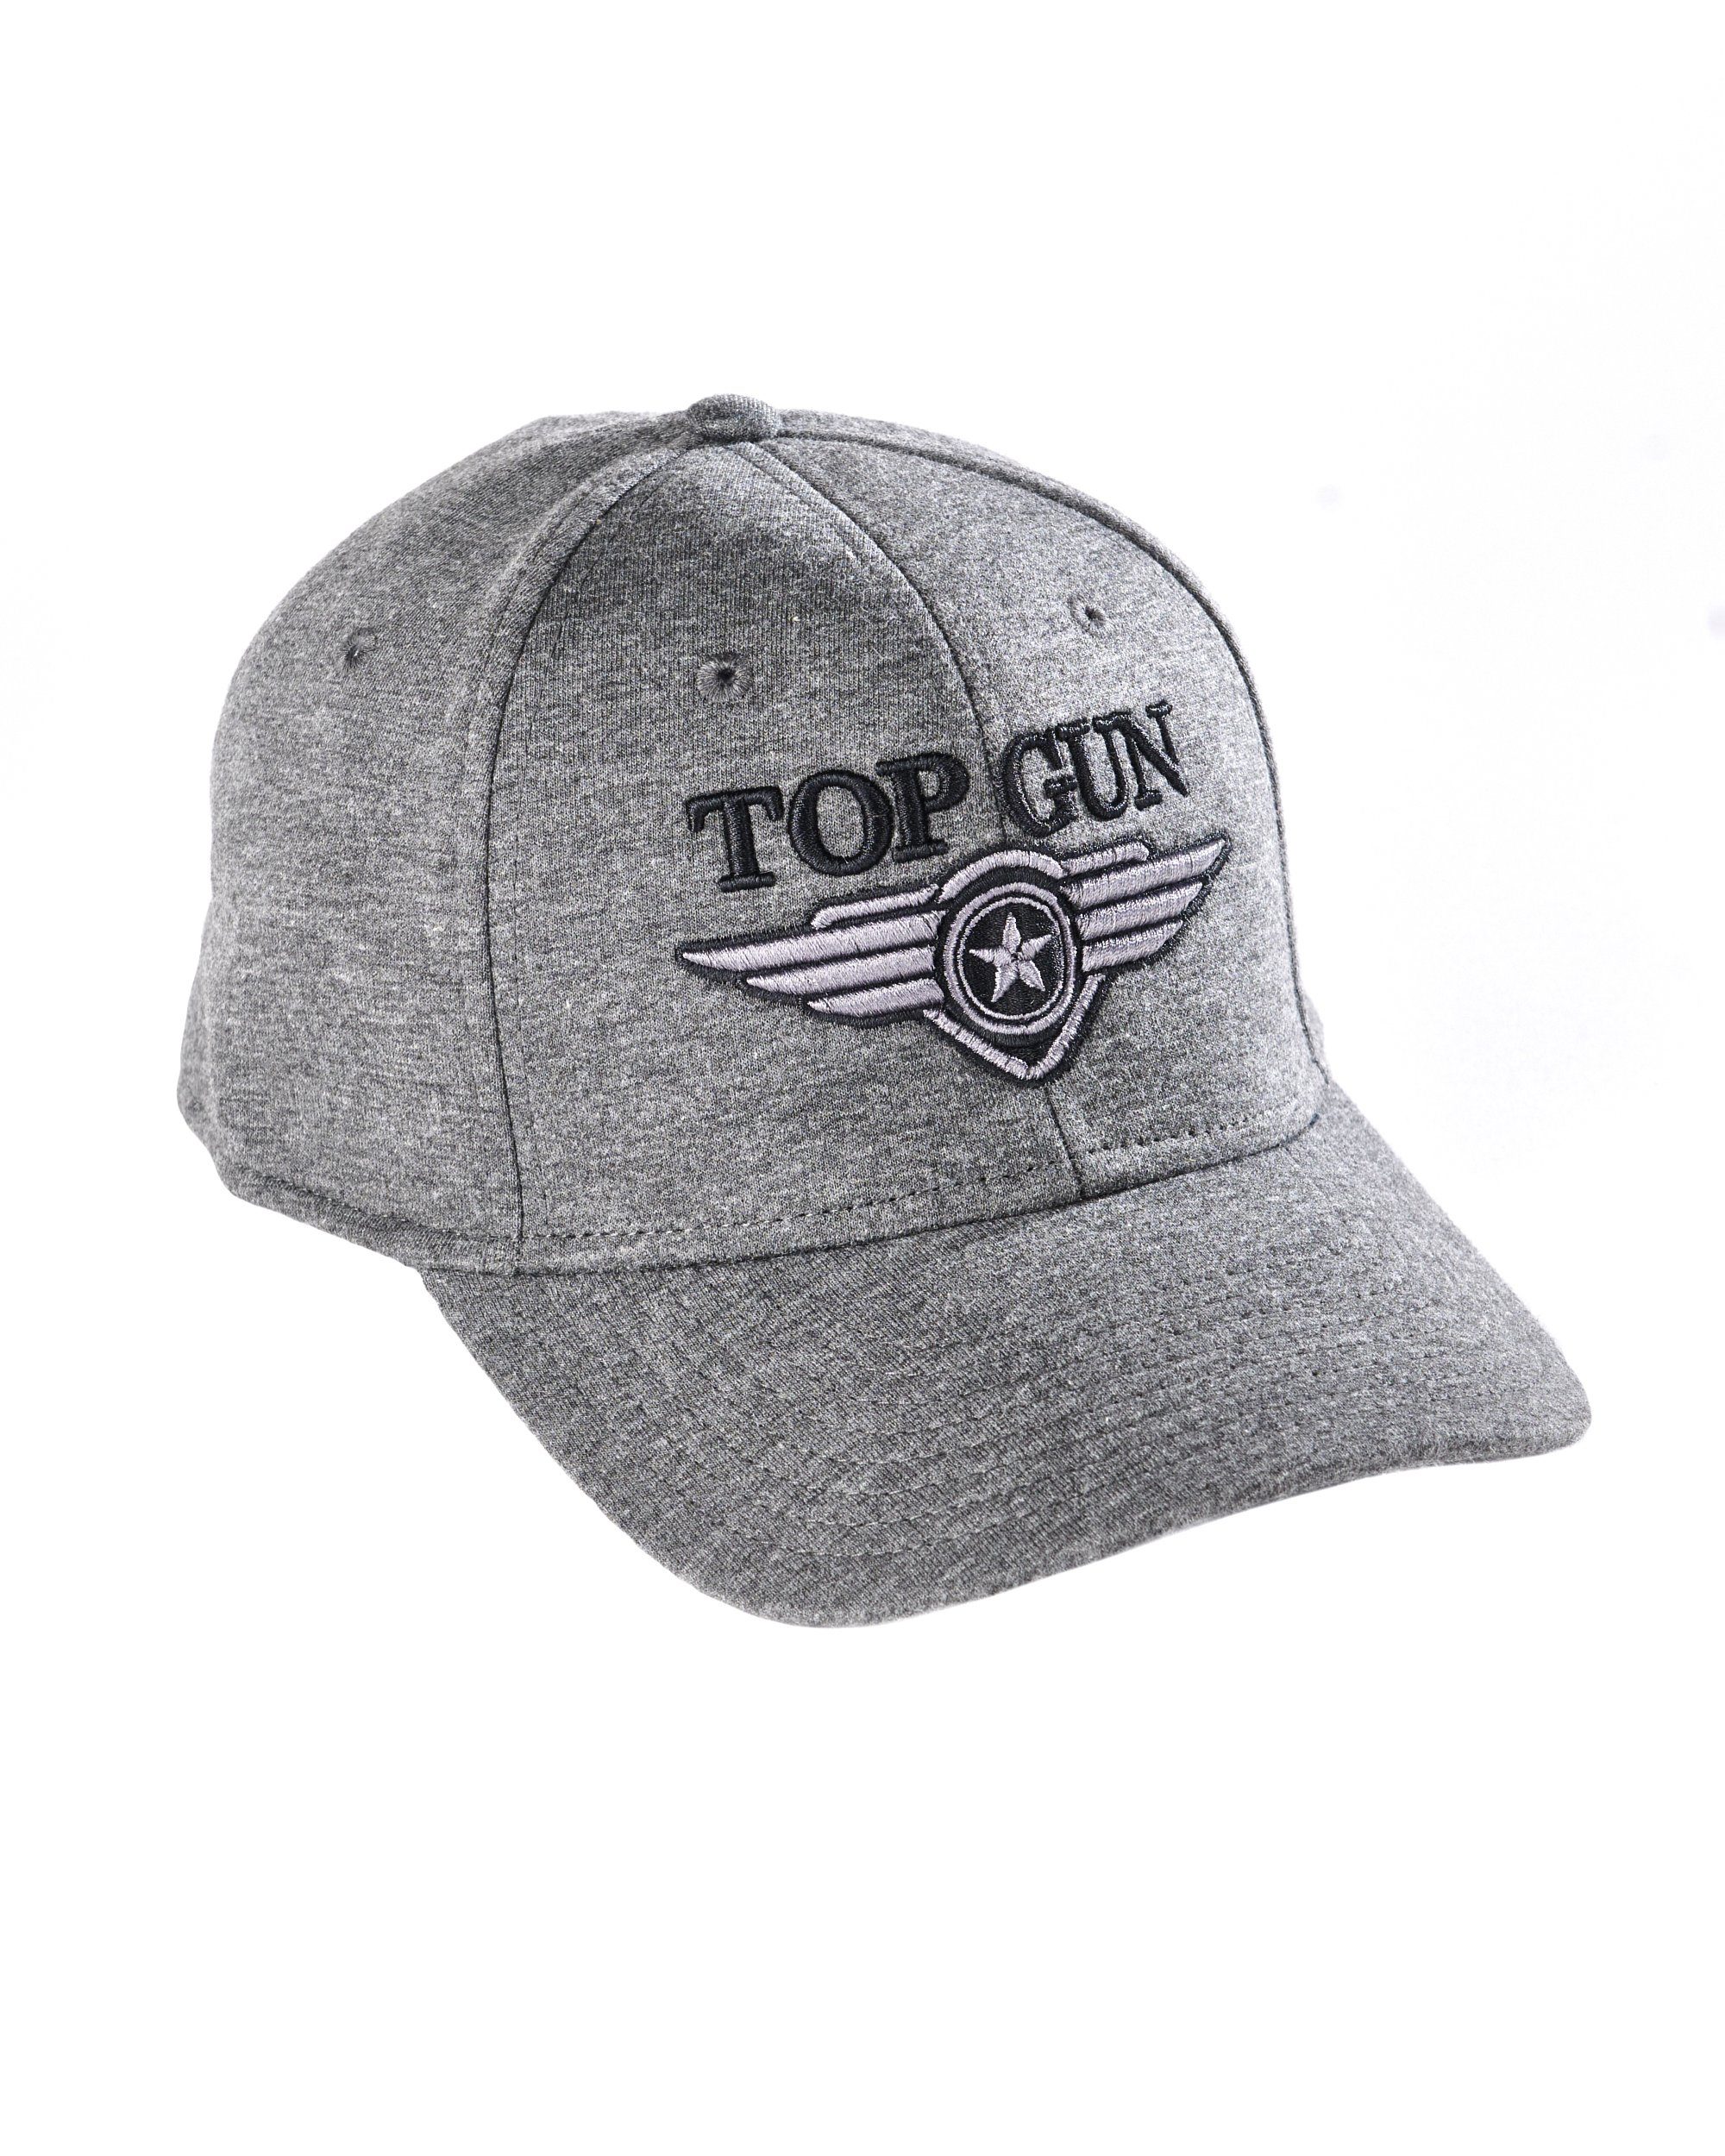 TOP GUN Cap TG20193167 black Snapback Snapback